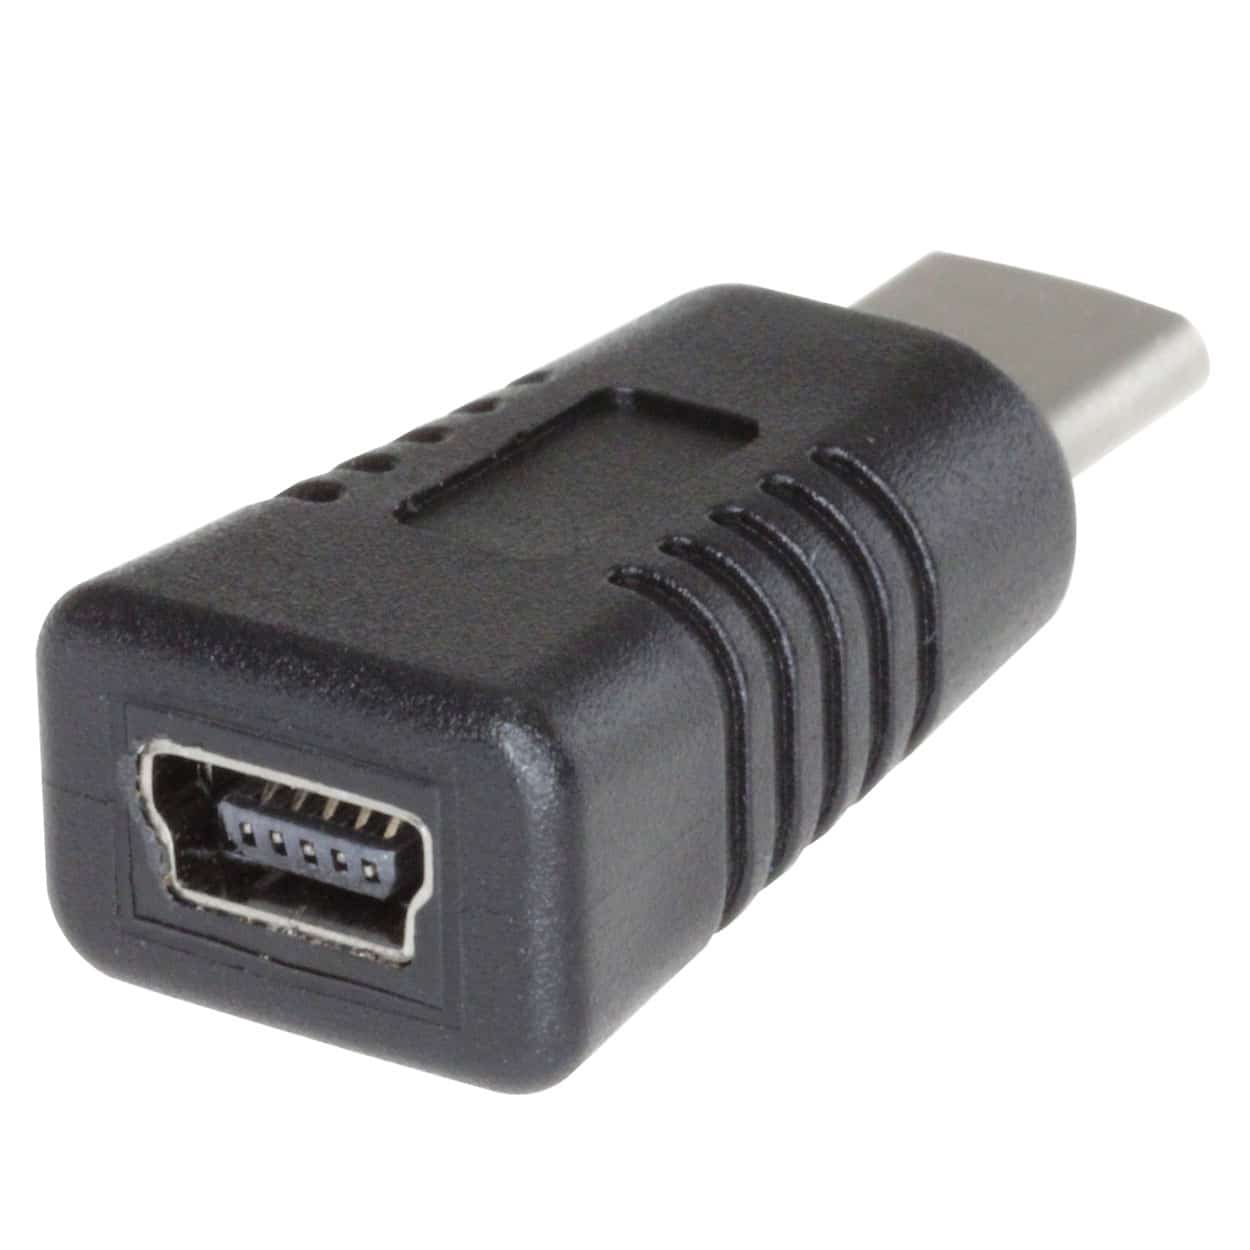 Fundament renovere fire gange 4XEM USB-C to Mini USB 2.0 Type-B Adaptor